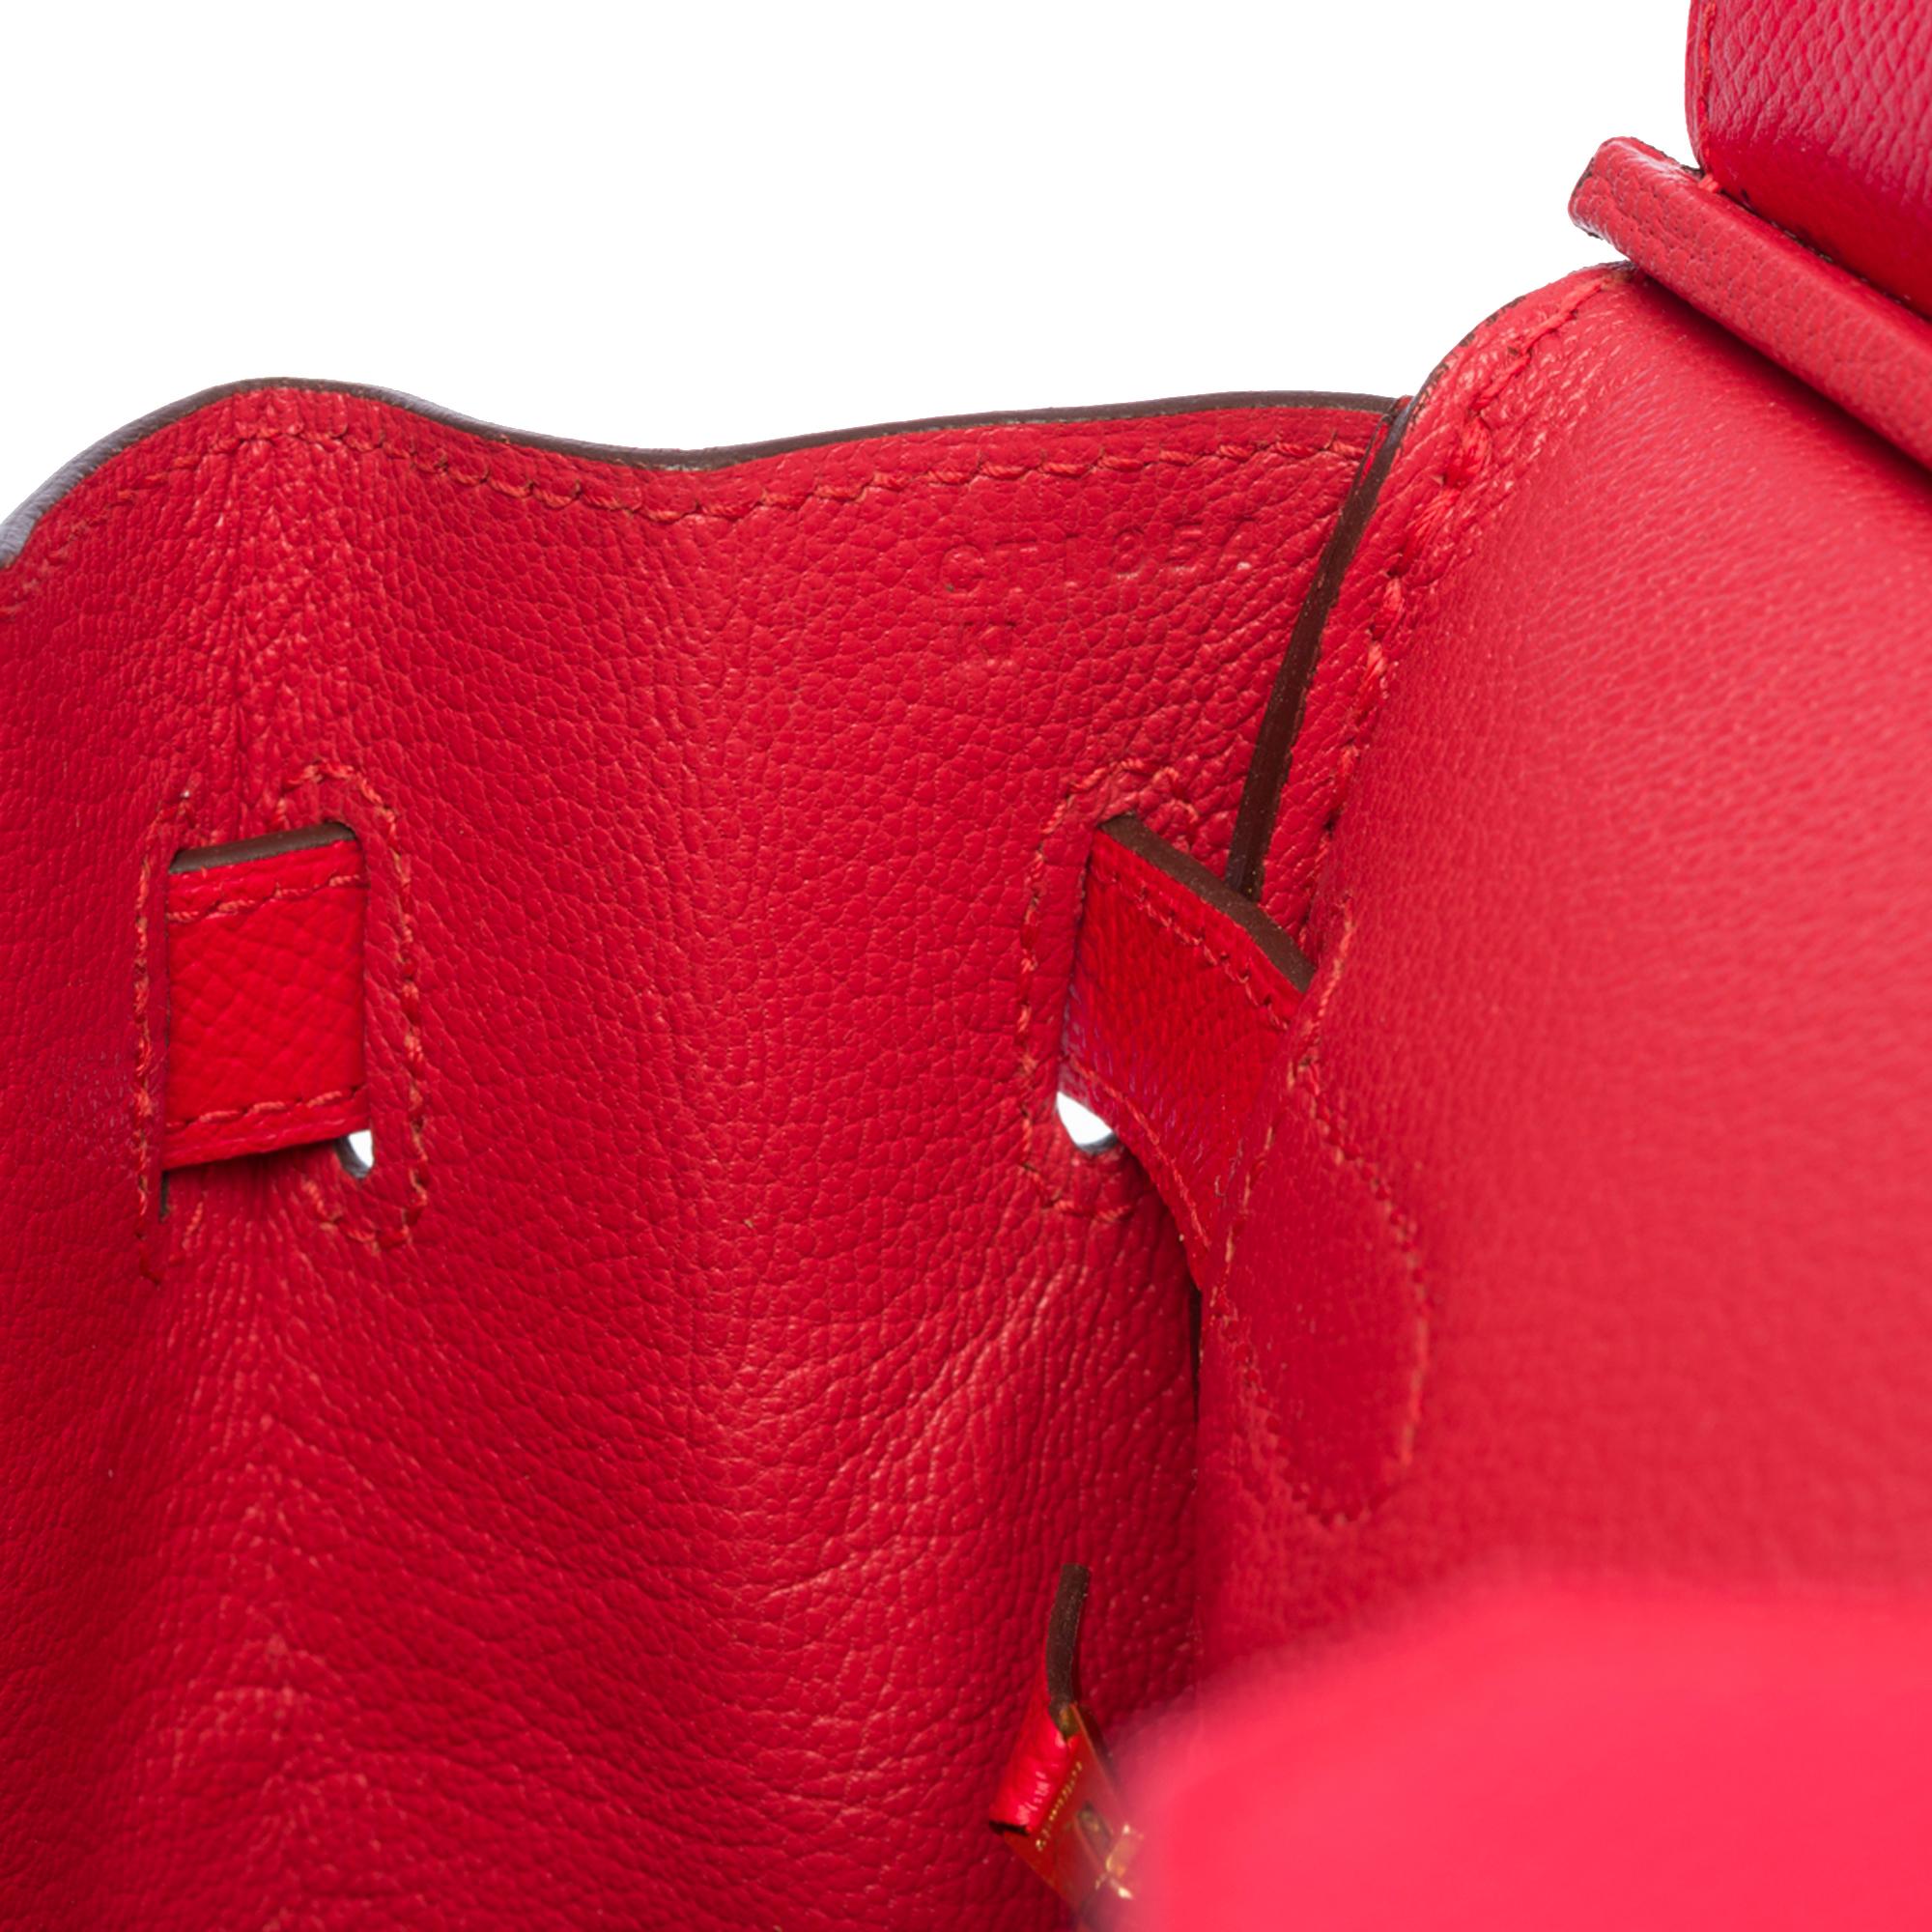 Stunning Hermès Birkin 30 handbag in Rouge de Coeur Epsom leather, GHW For Sale 2